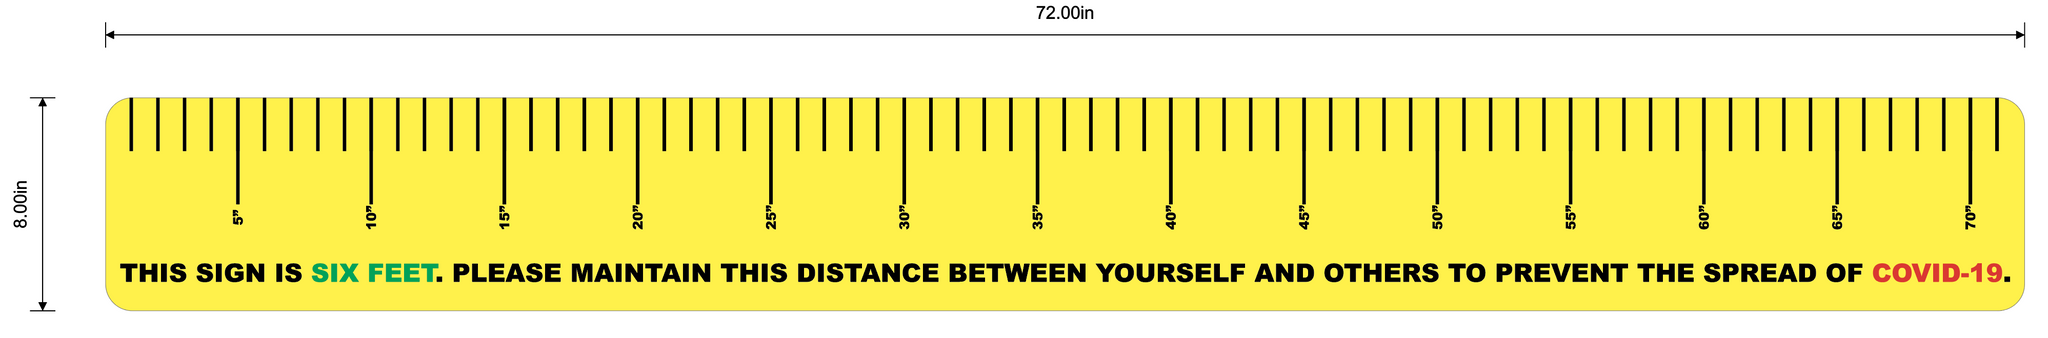 Social Distancing Ruler - 72"x8" Durable Floor Sign